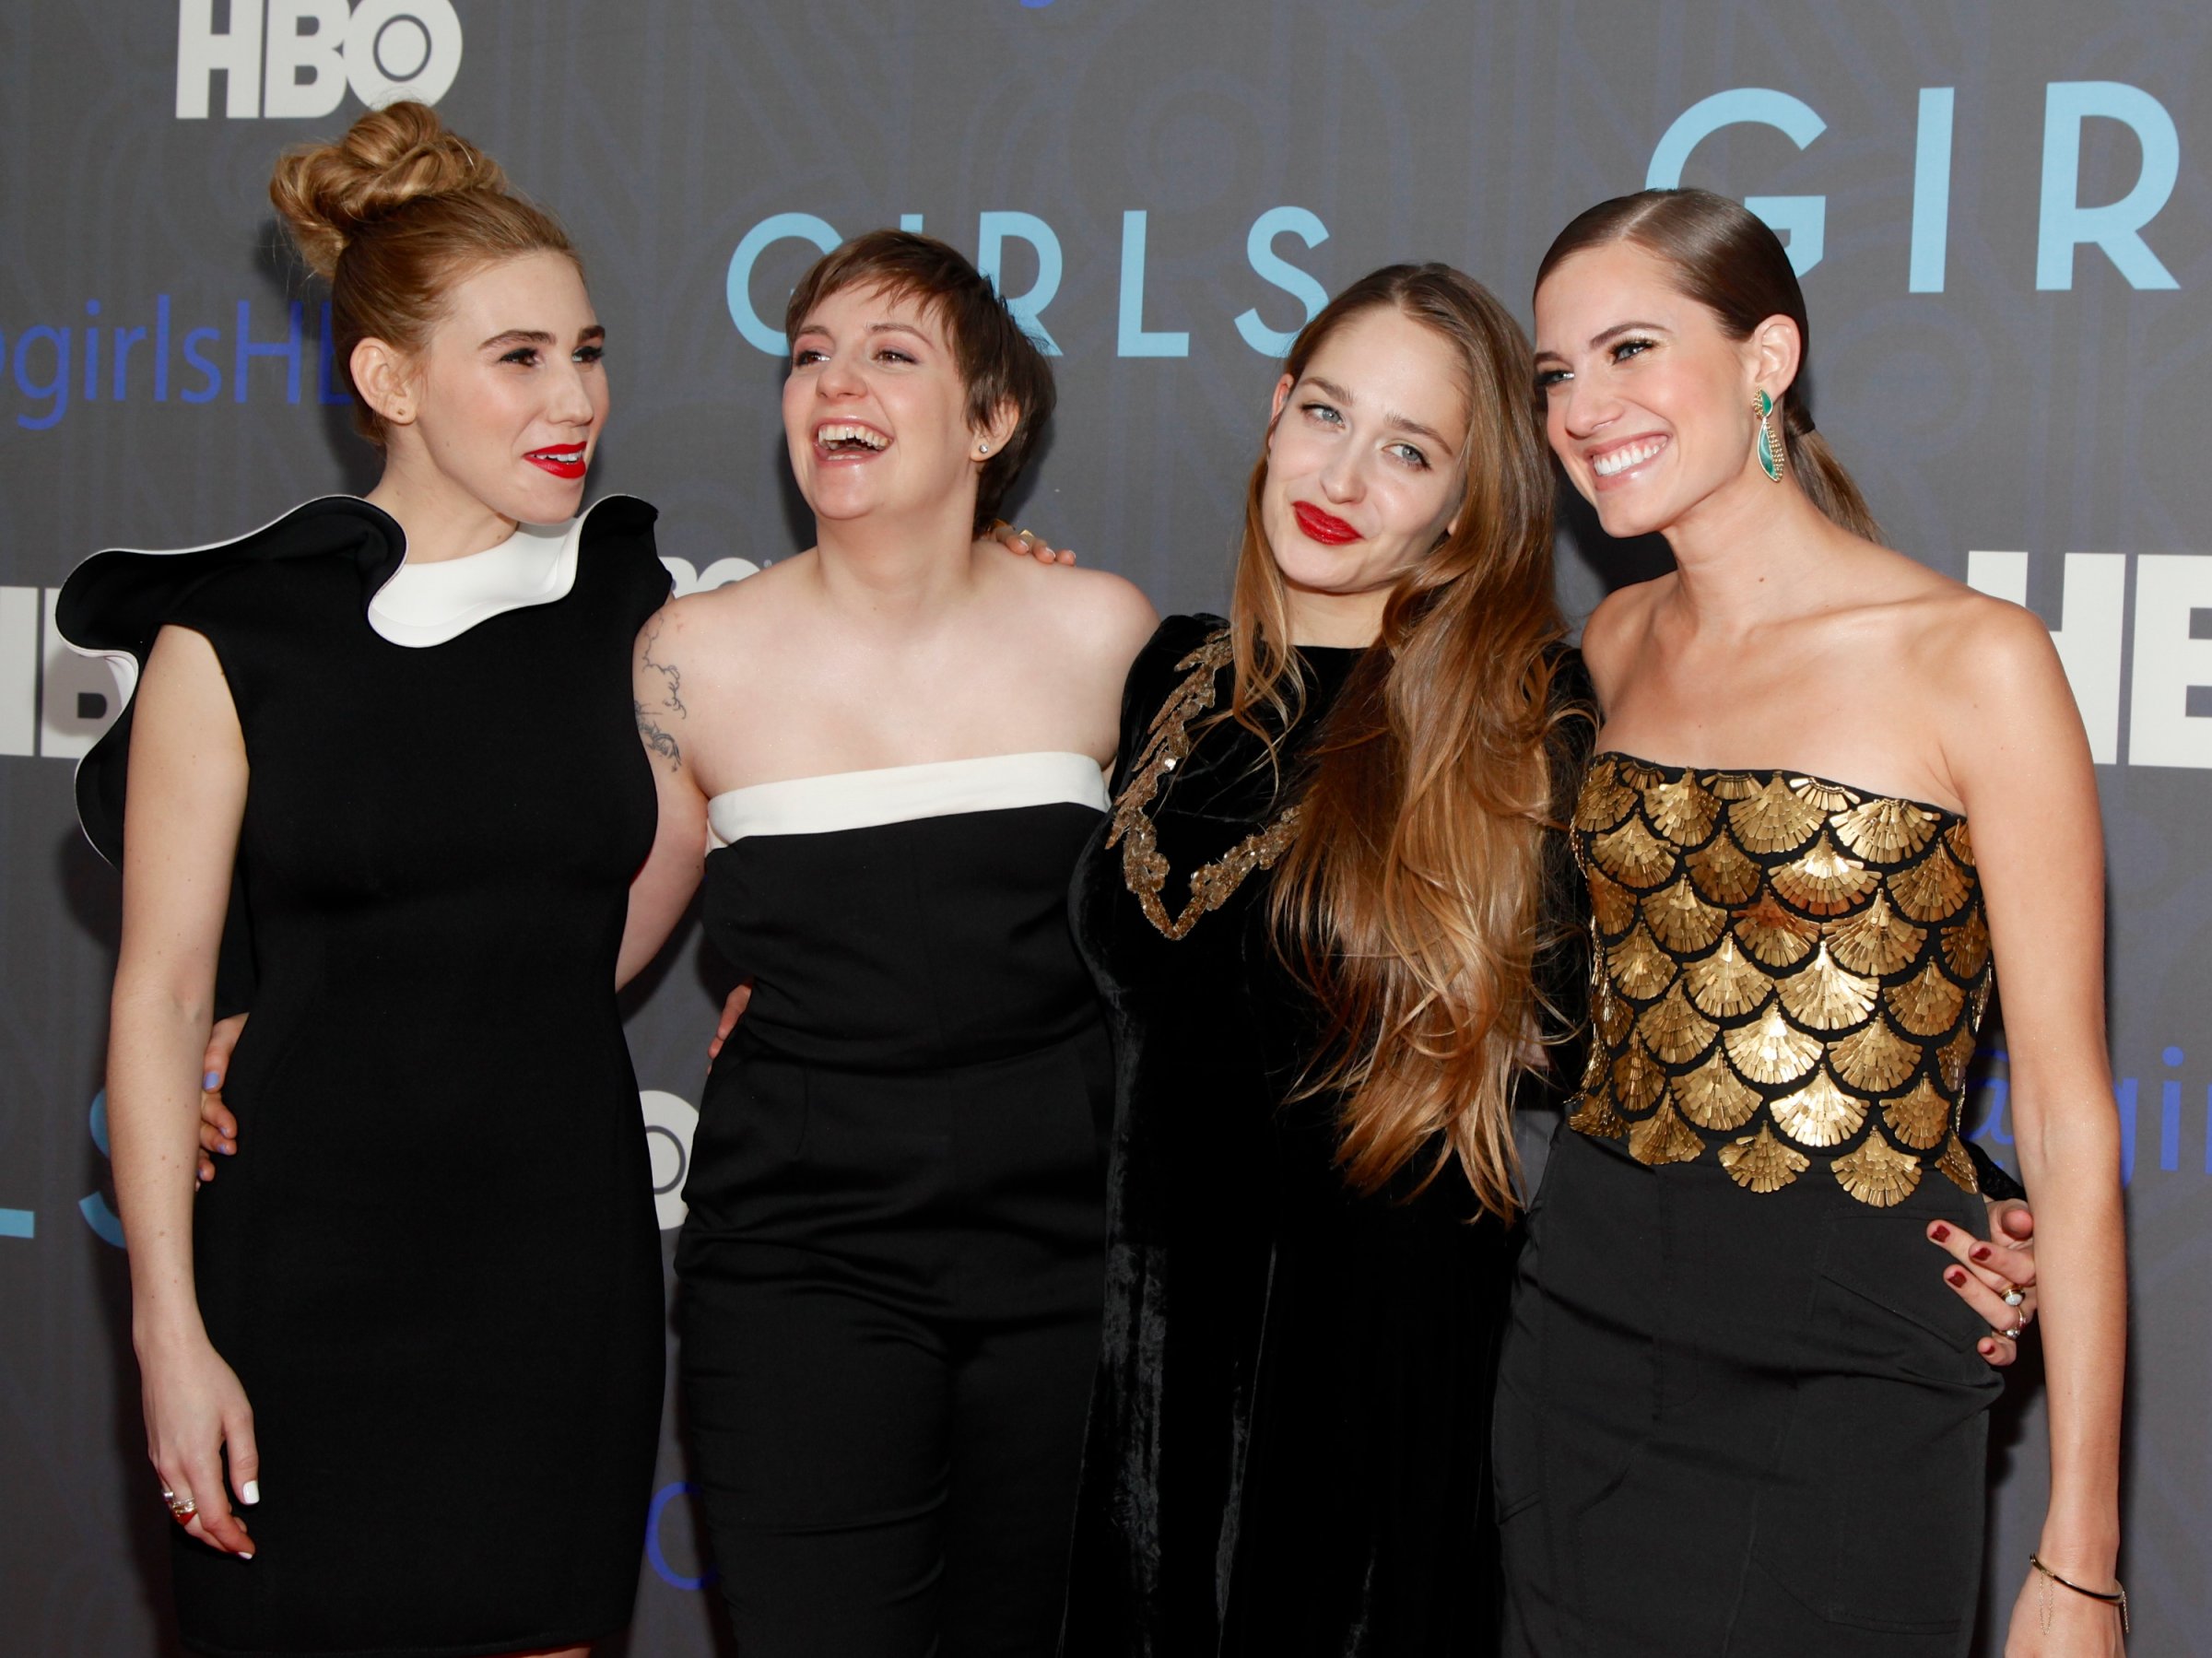 HBO Hosts The Premiere Of "Girls" Season 2 - Inside Arrivals